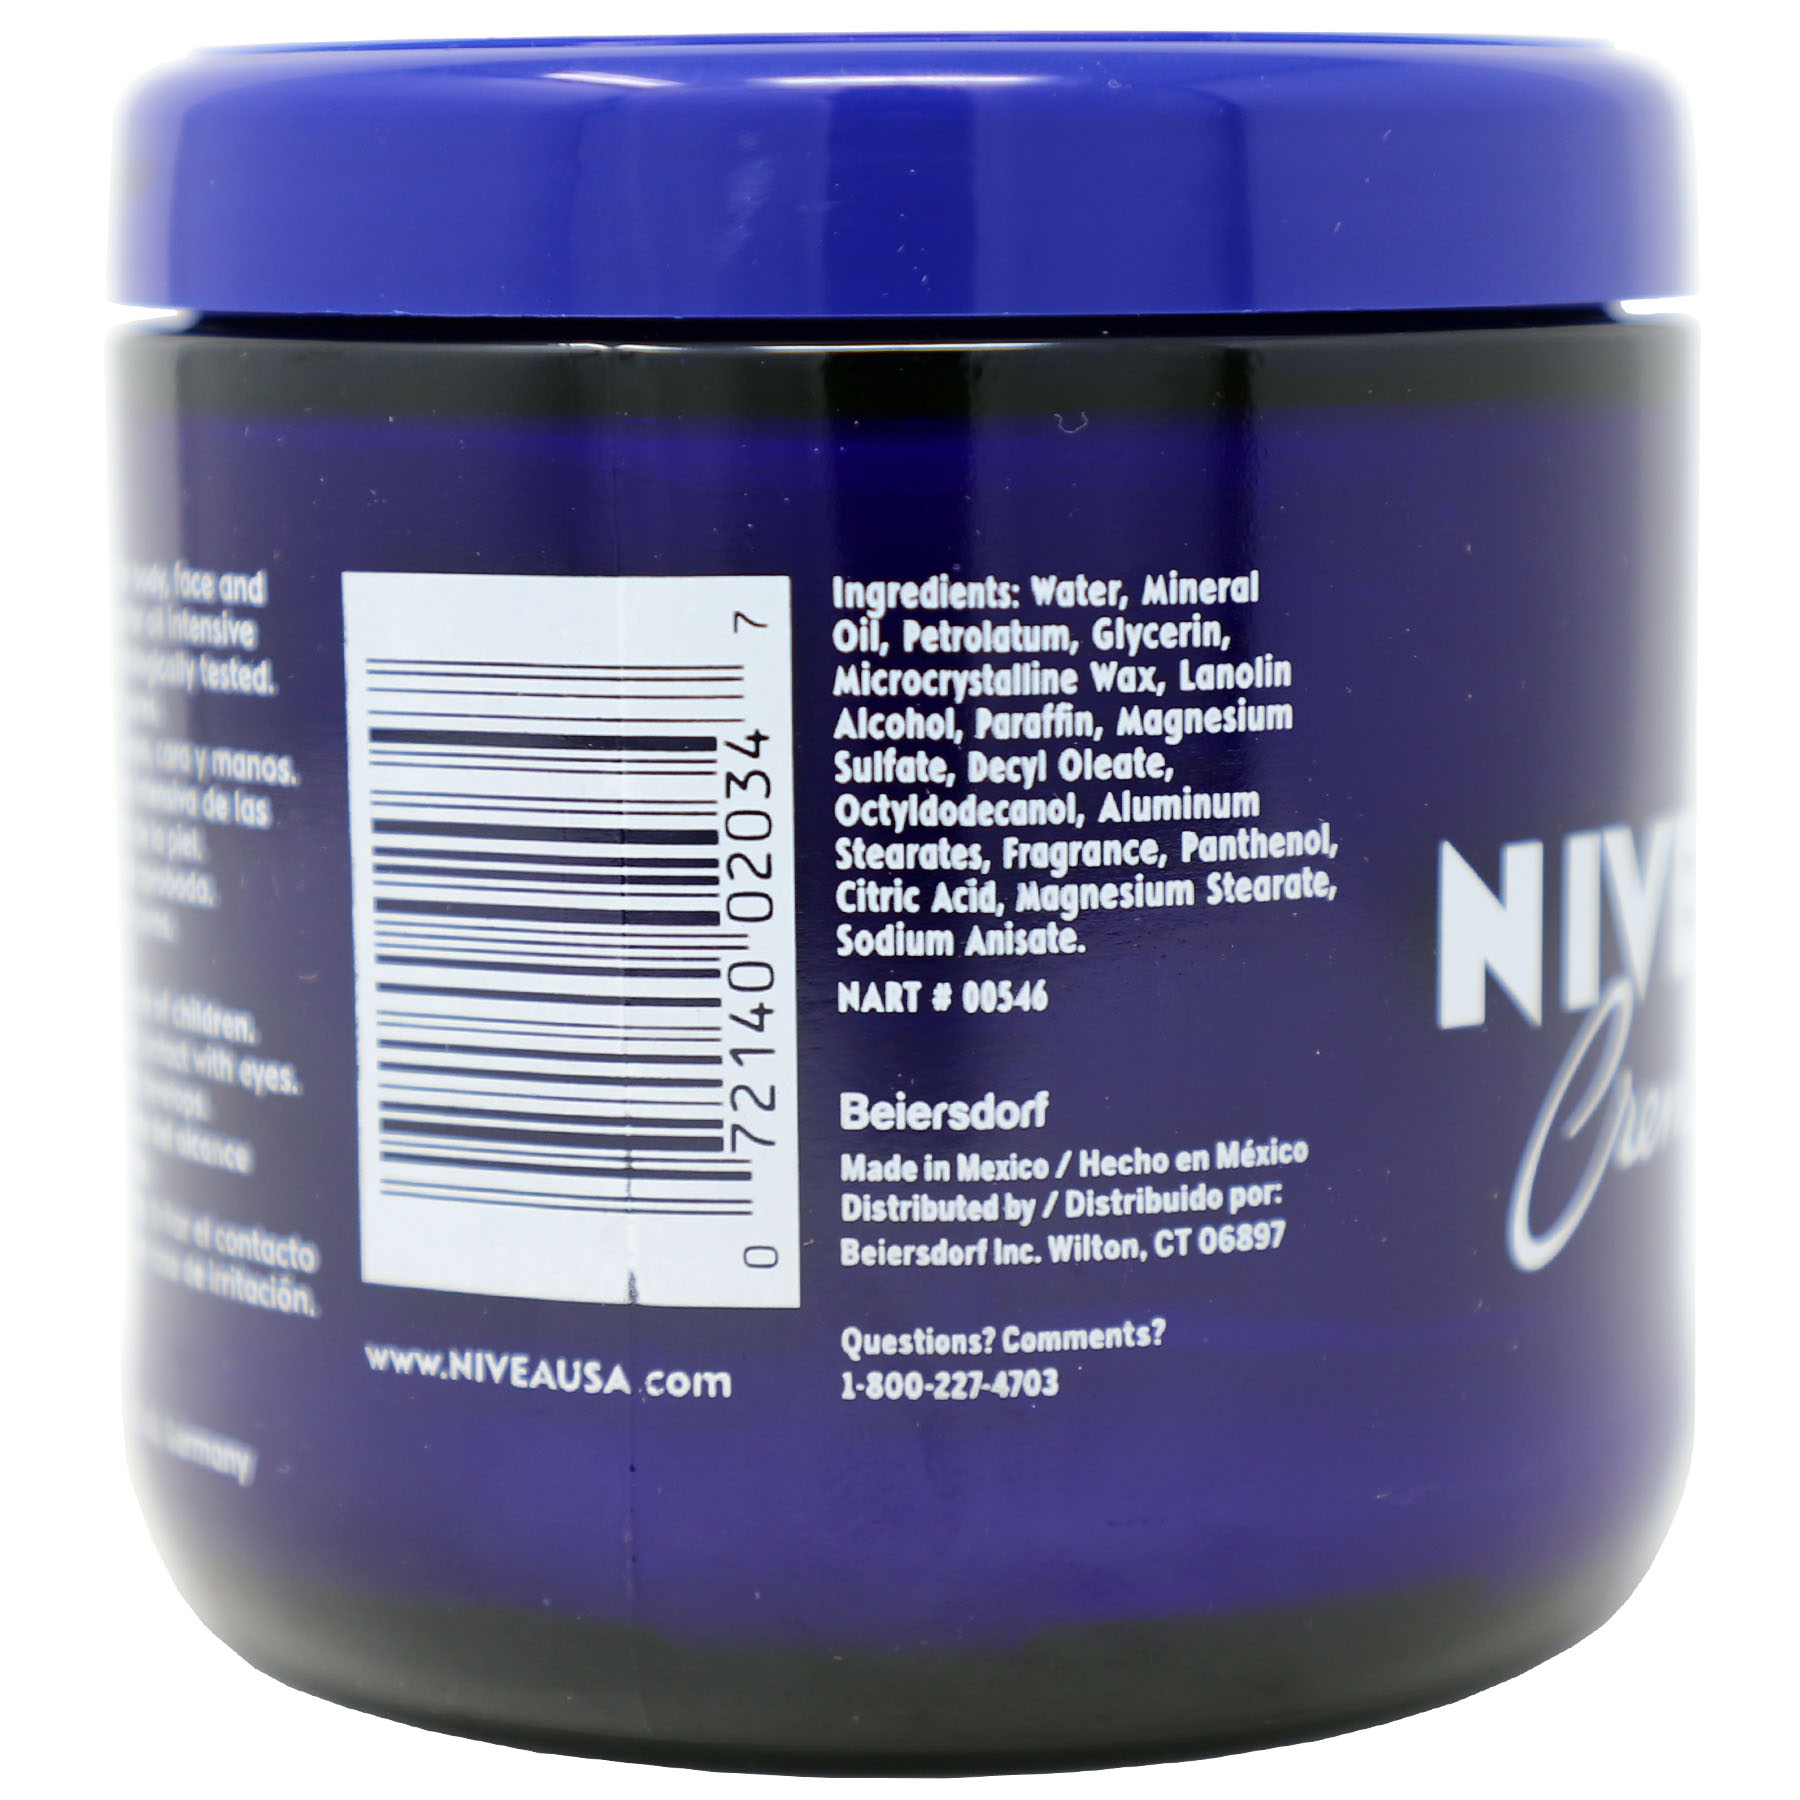 Nivea Cream Glass Jar, Moisturizer for Body, Face & Hand Care, All Skin Types, 13.5 oz - image 4 of 5